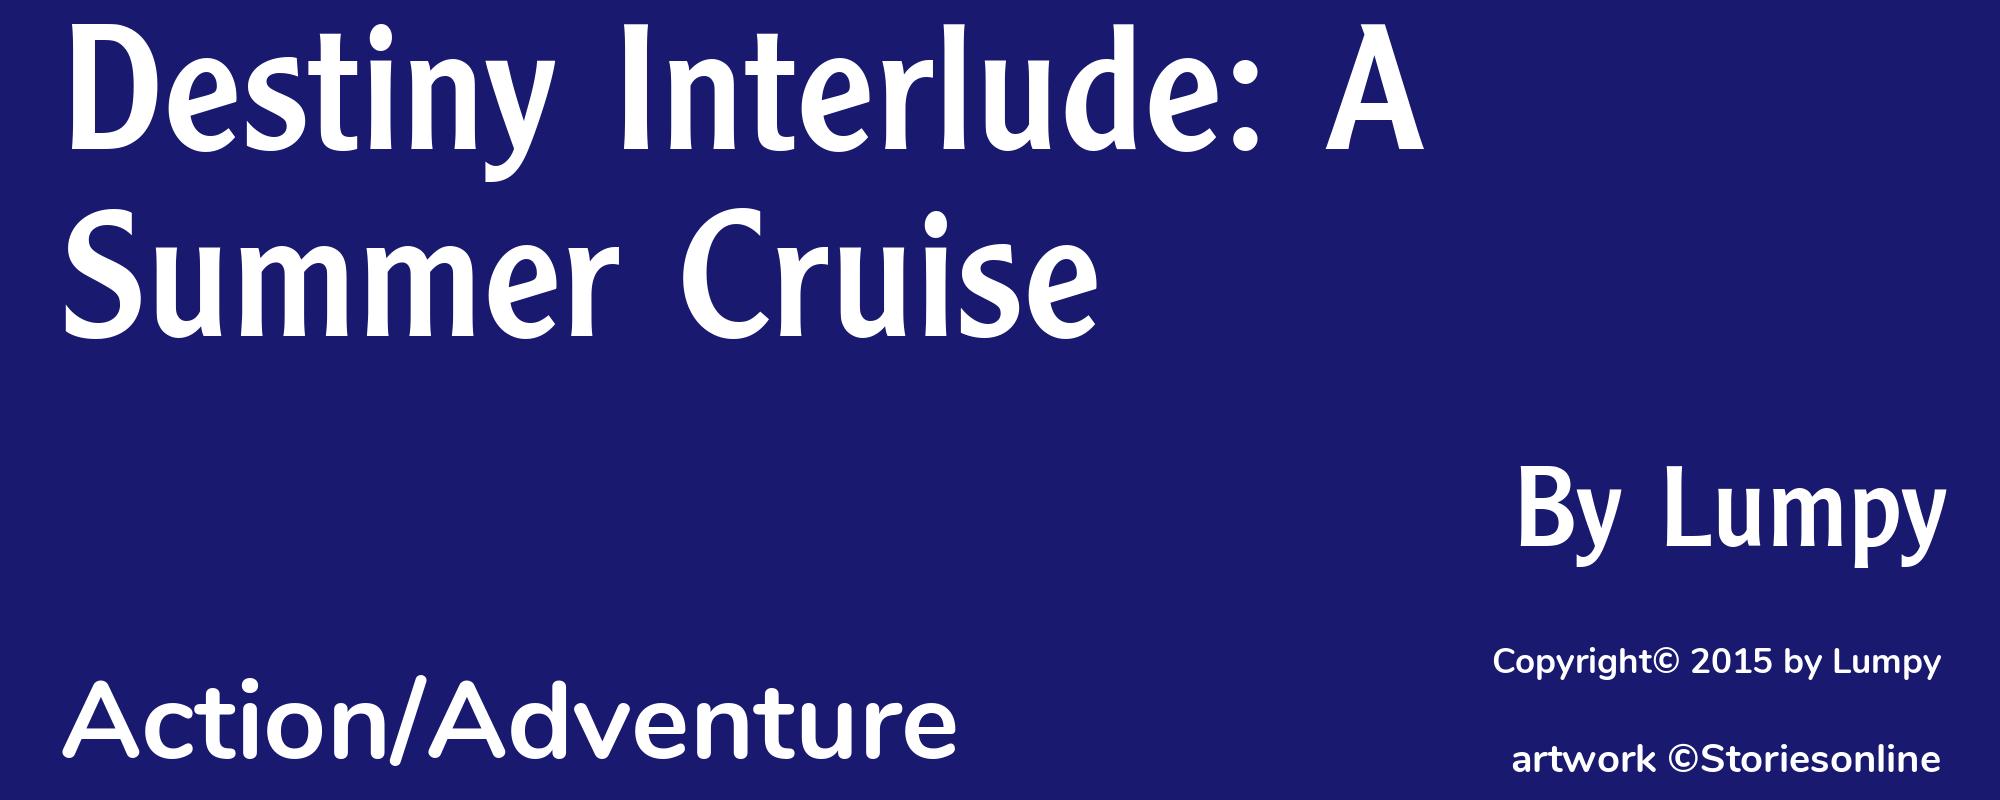 Destiny Interlude: A Summer Cruise - Cover